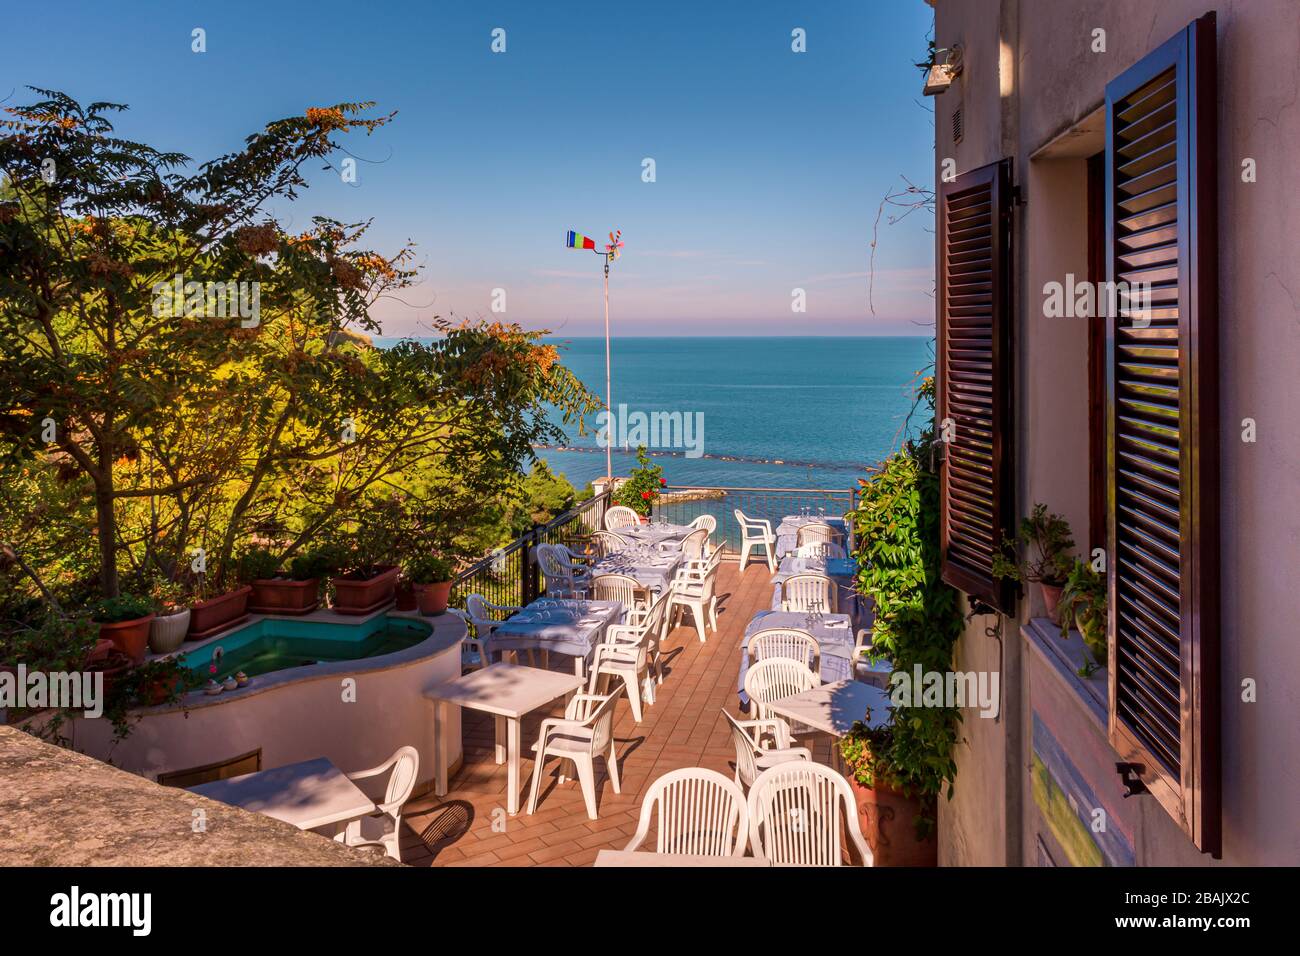 A sunny restaurant outdoor terrace overlooking the Adriatic Sea on the Italian Riviera, Numana, Marche, Italy Stock Photo